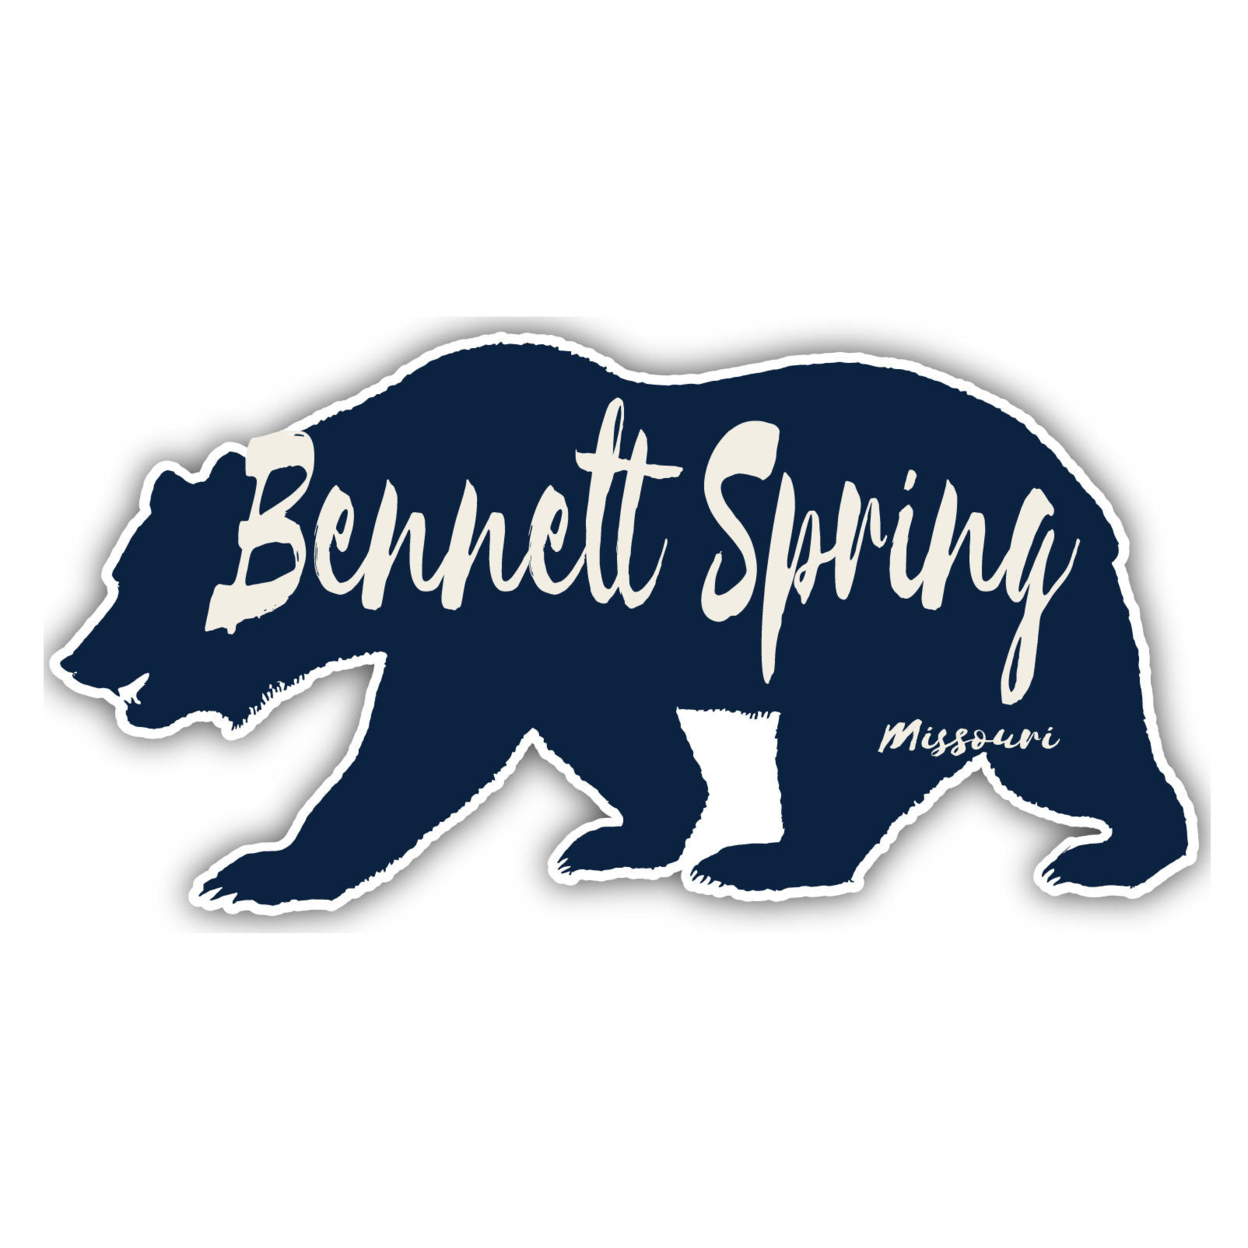 Bennett Spring Missouri Souvenir Decorative Stickers (Choose Theme And Size) - 4-Pack, 4-Inch, Bear